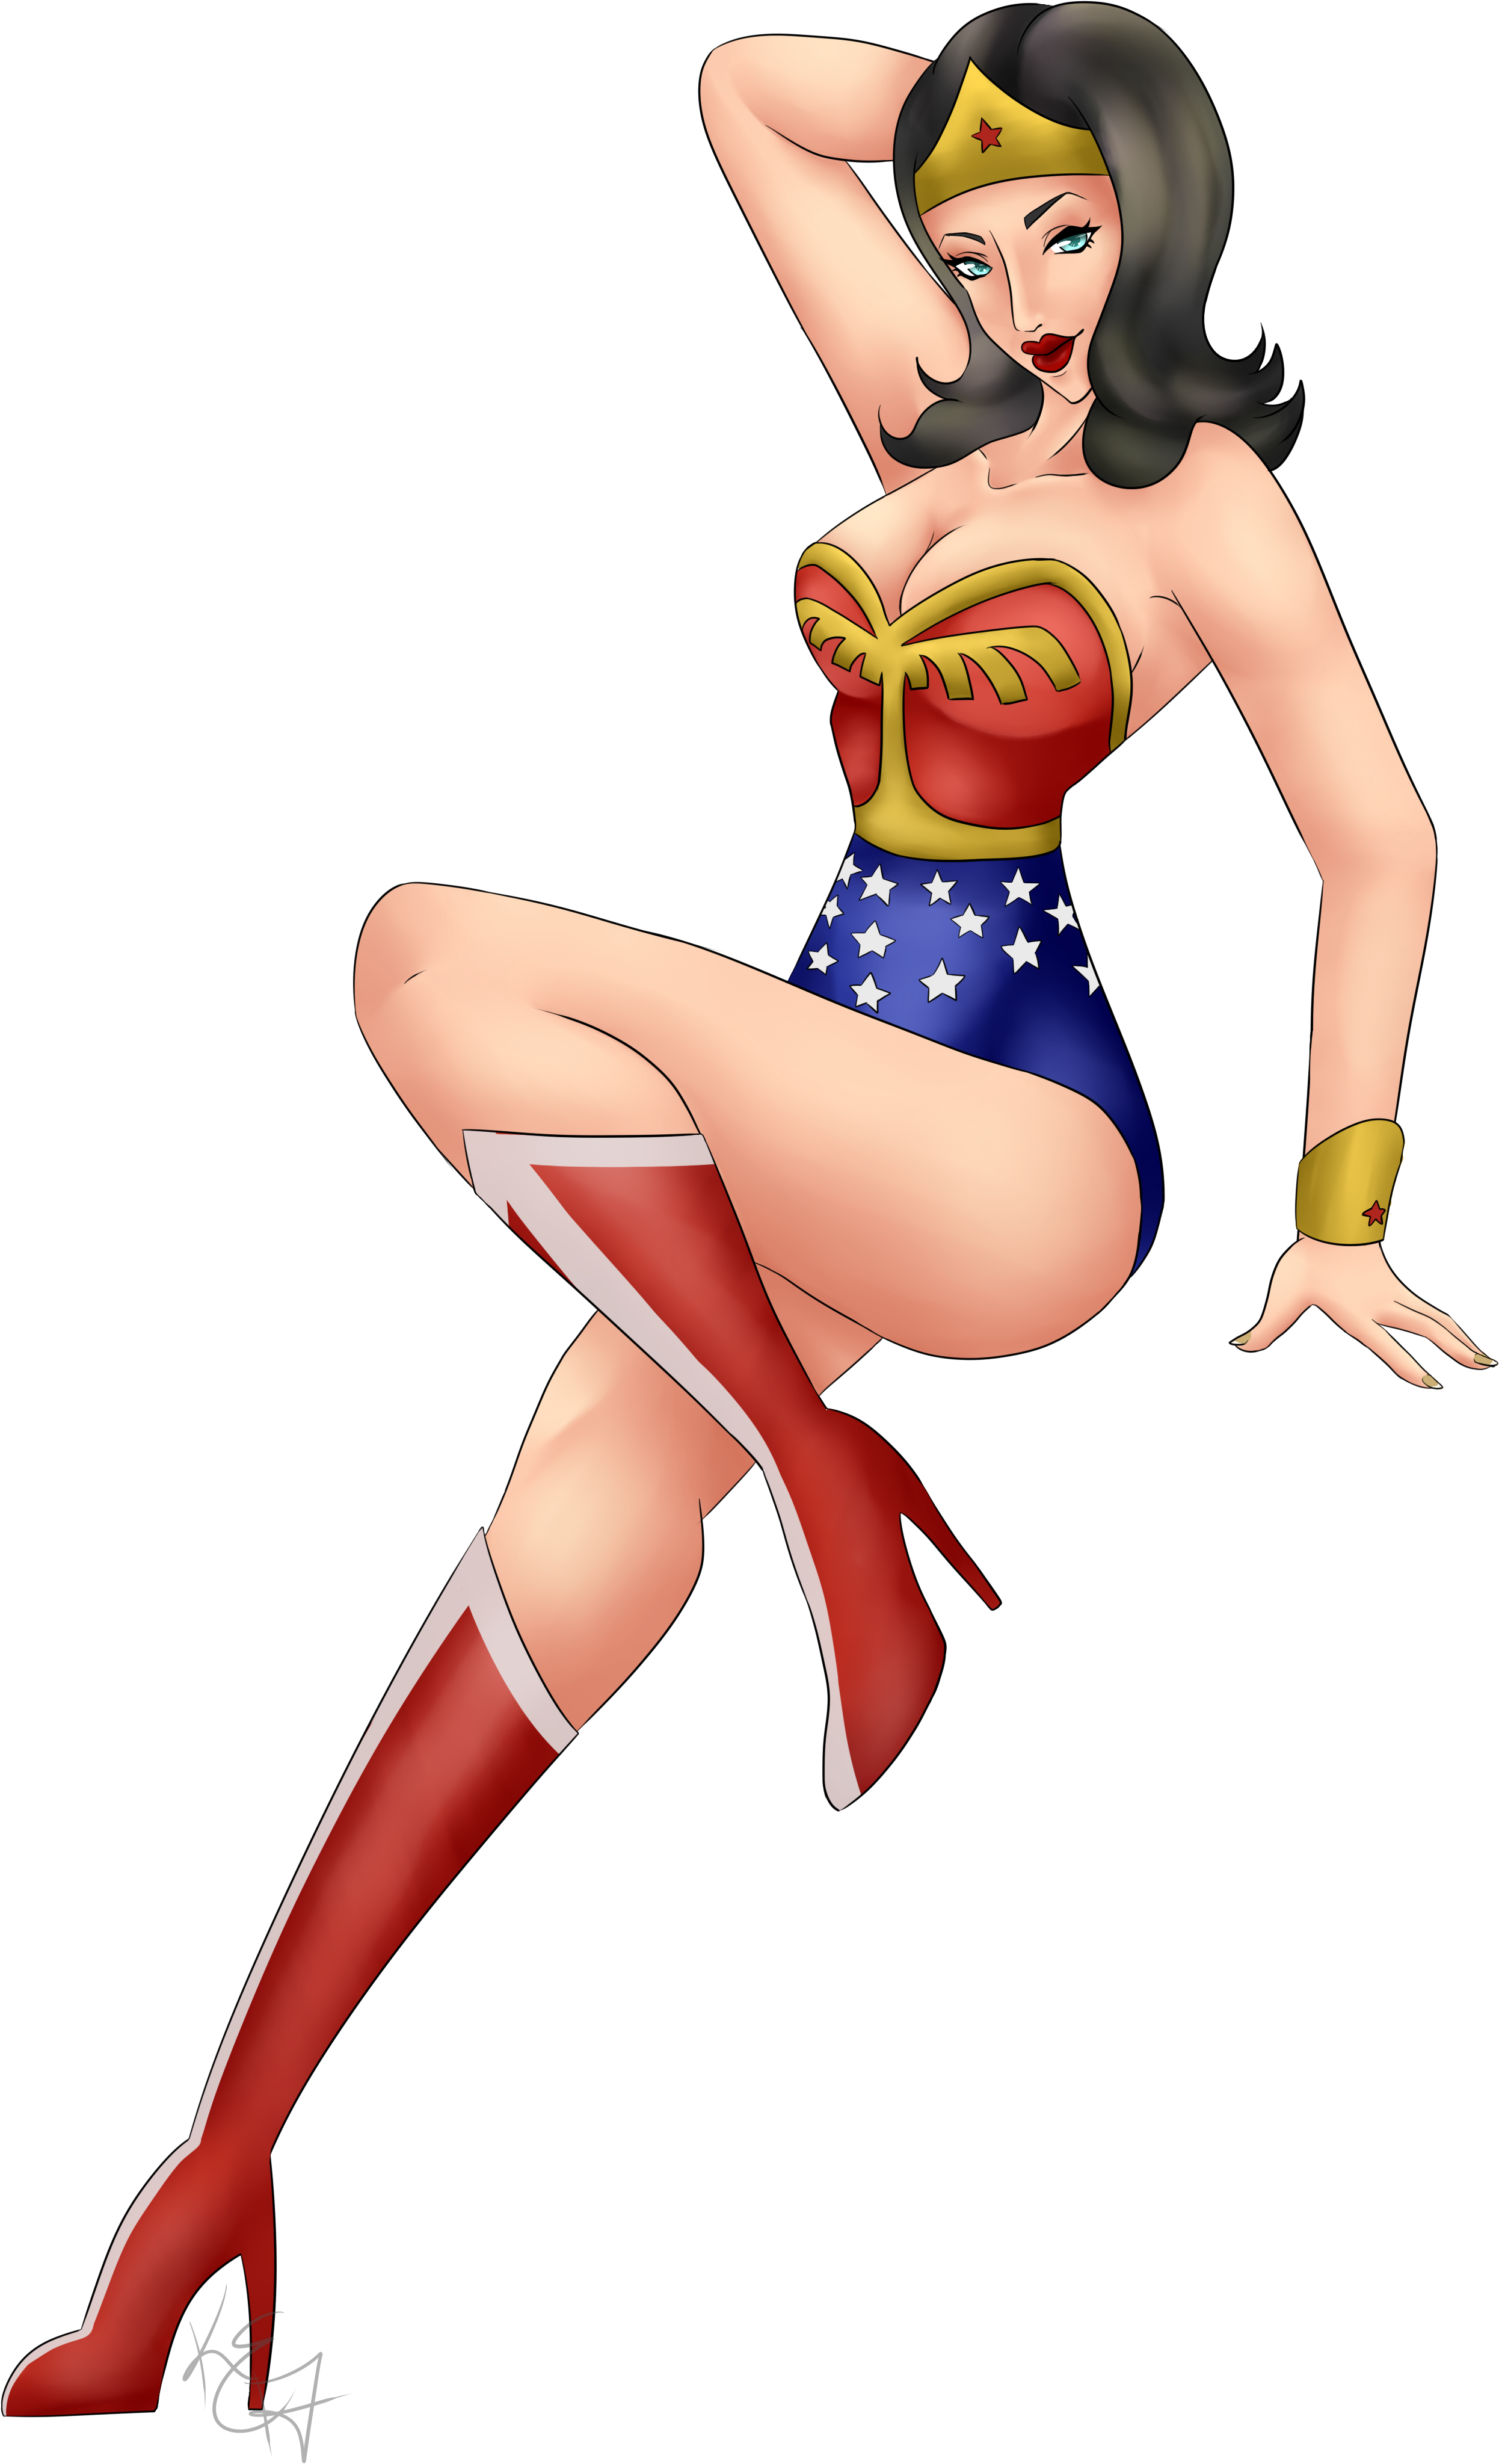 #wonder Drawings On Paigeeworld - Wonder Woman Pinup.